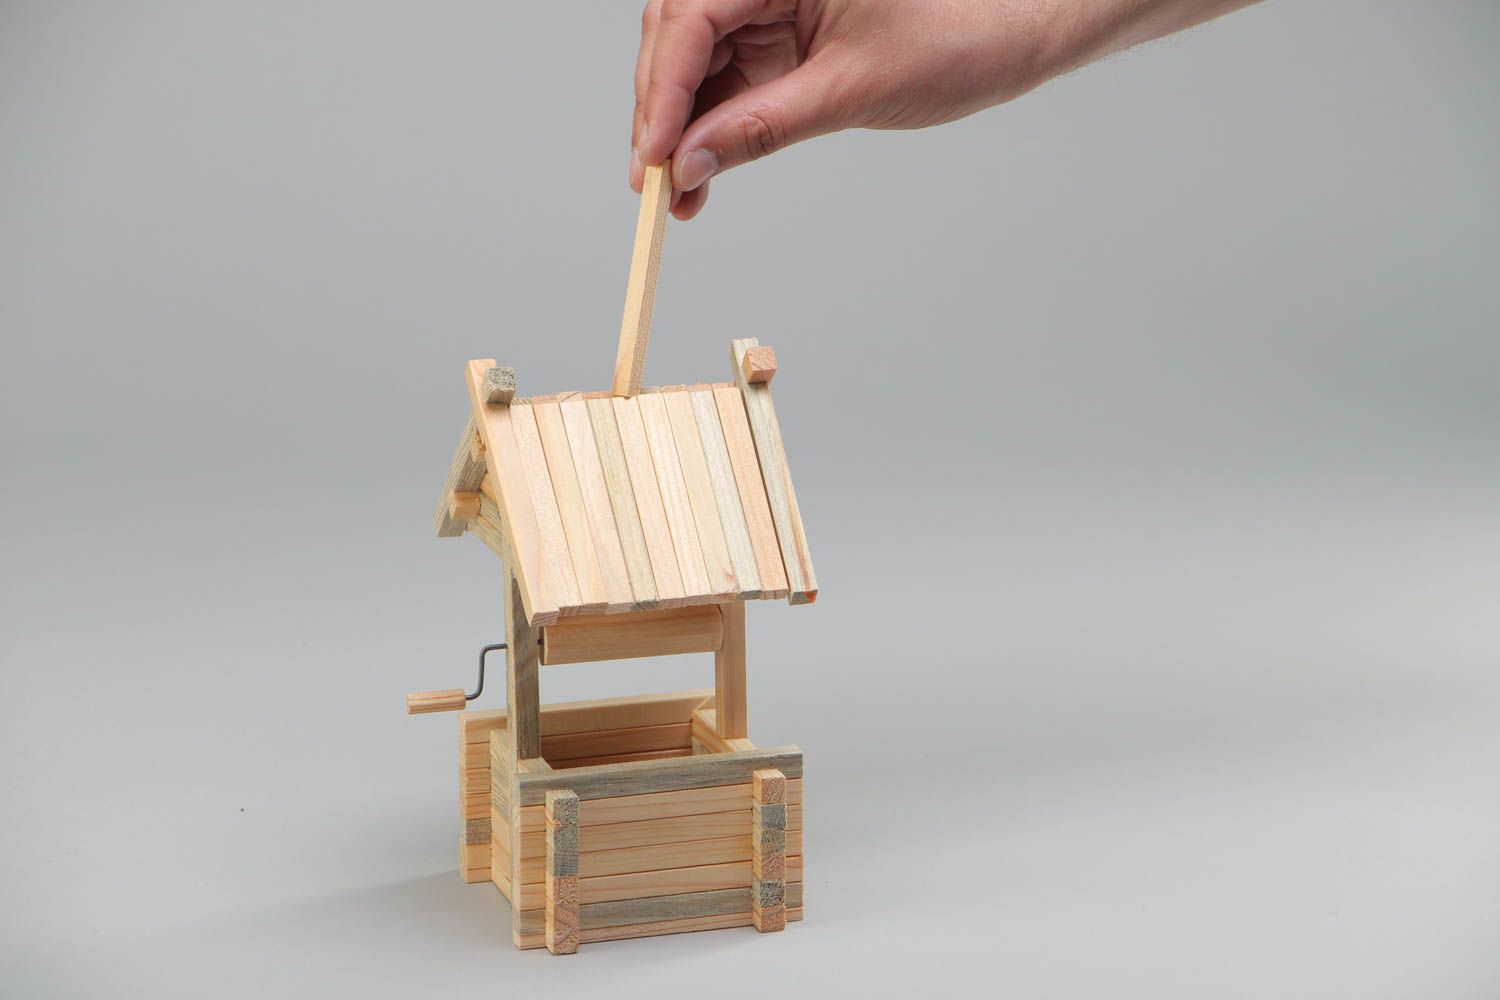 Mecano de madera pozo de 59 detalles juguete de desarrollo artesanal  foto 5